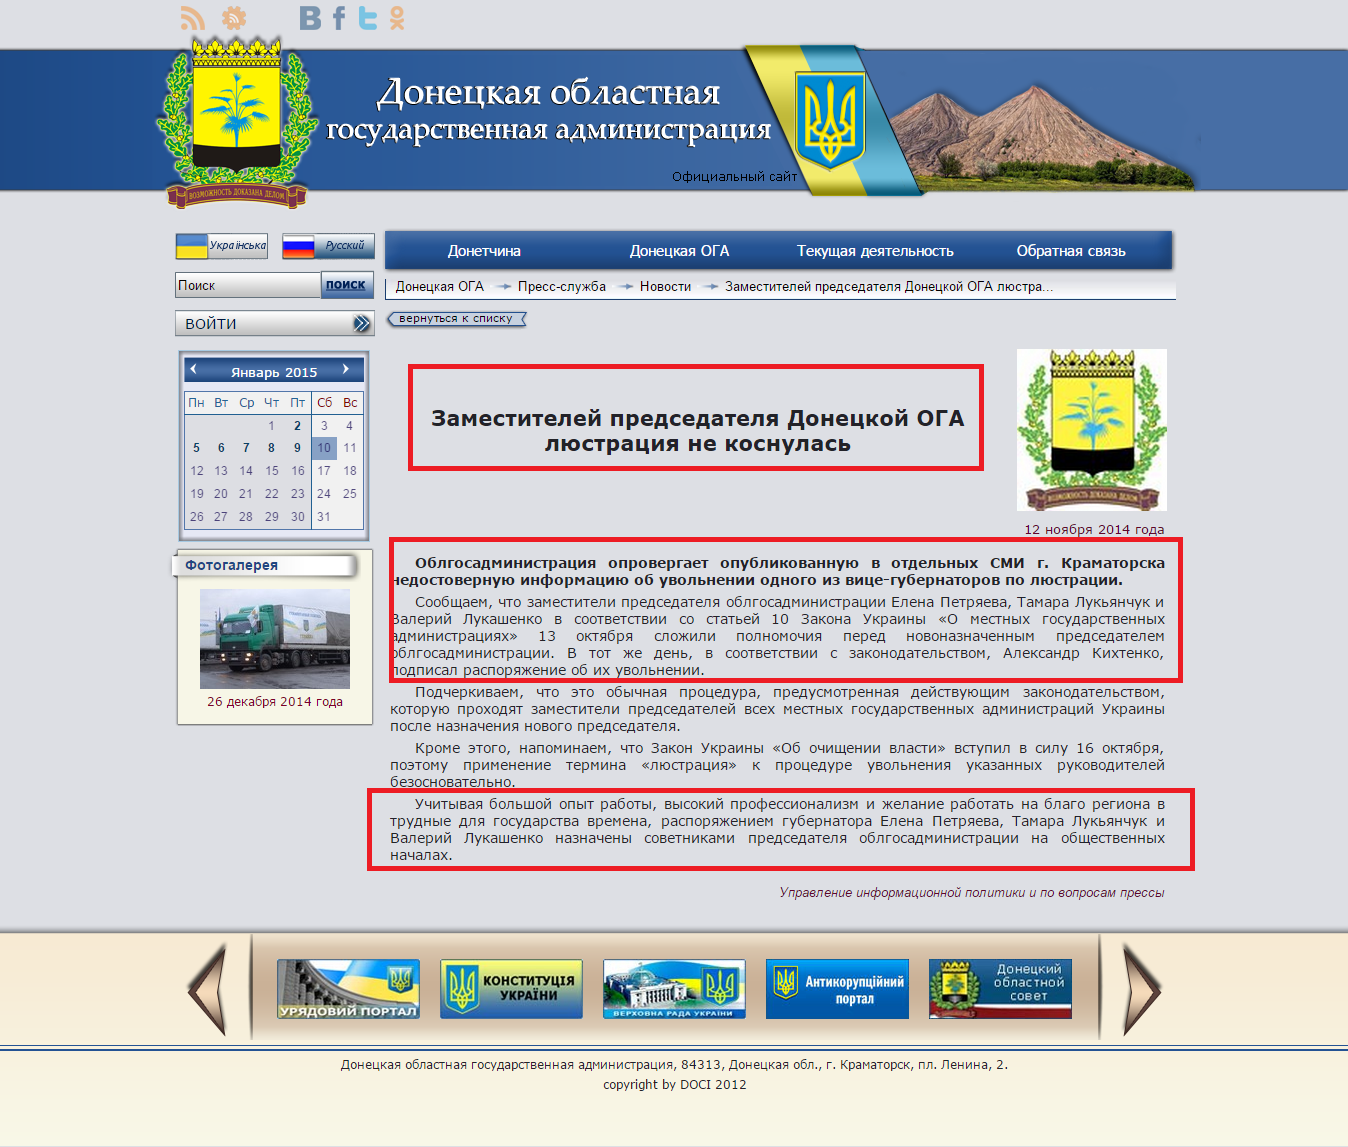 http://donoda.gov.ua/?lang=ru&sec=02.03.09&iface=Public&cmd=view&args=id:22044